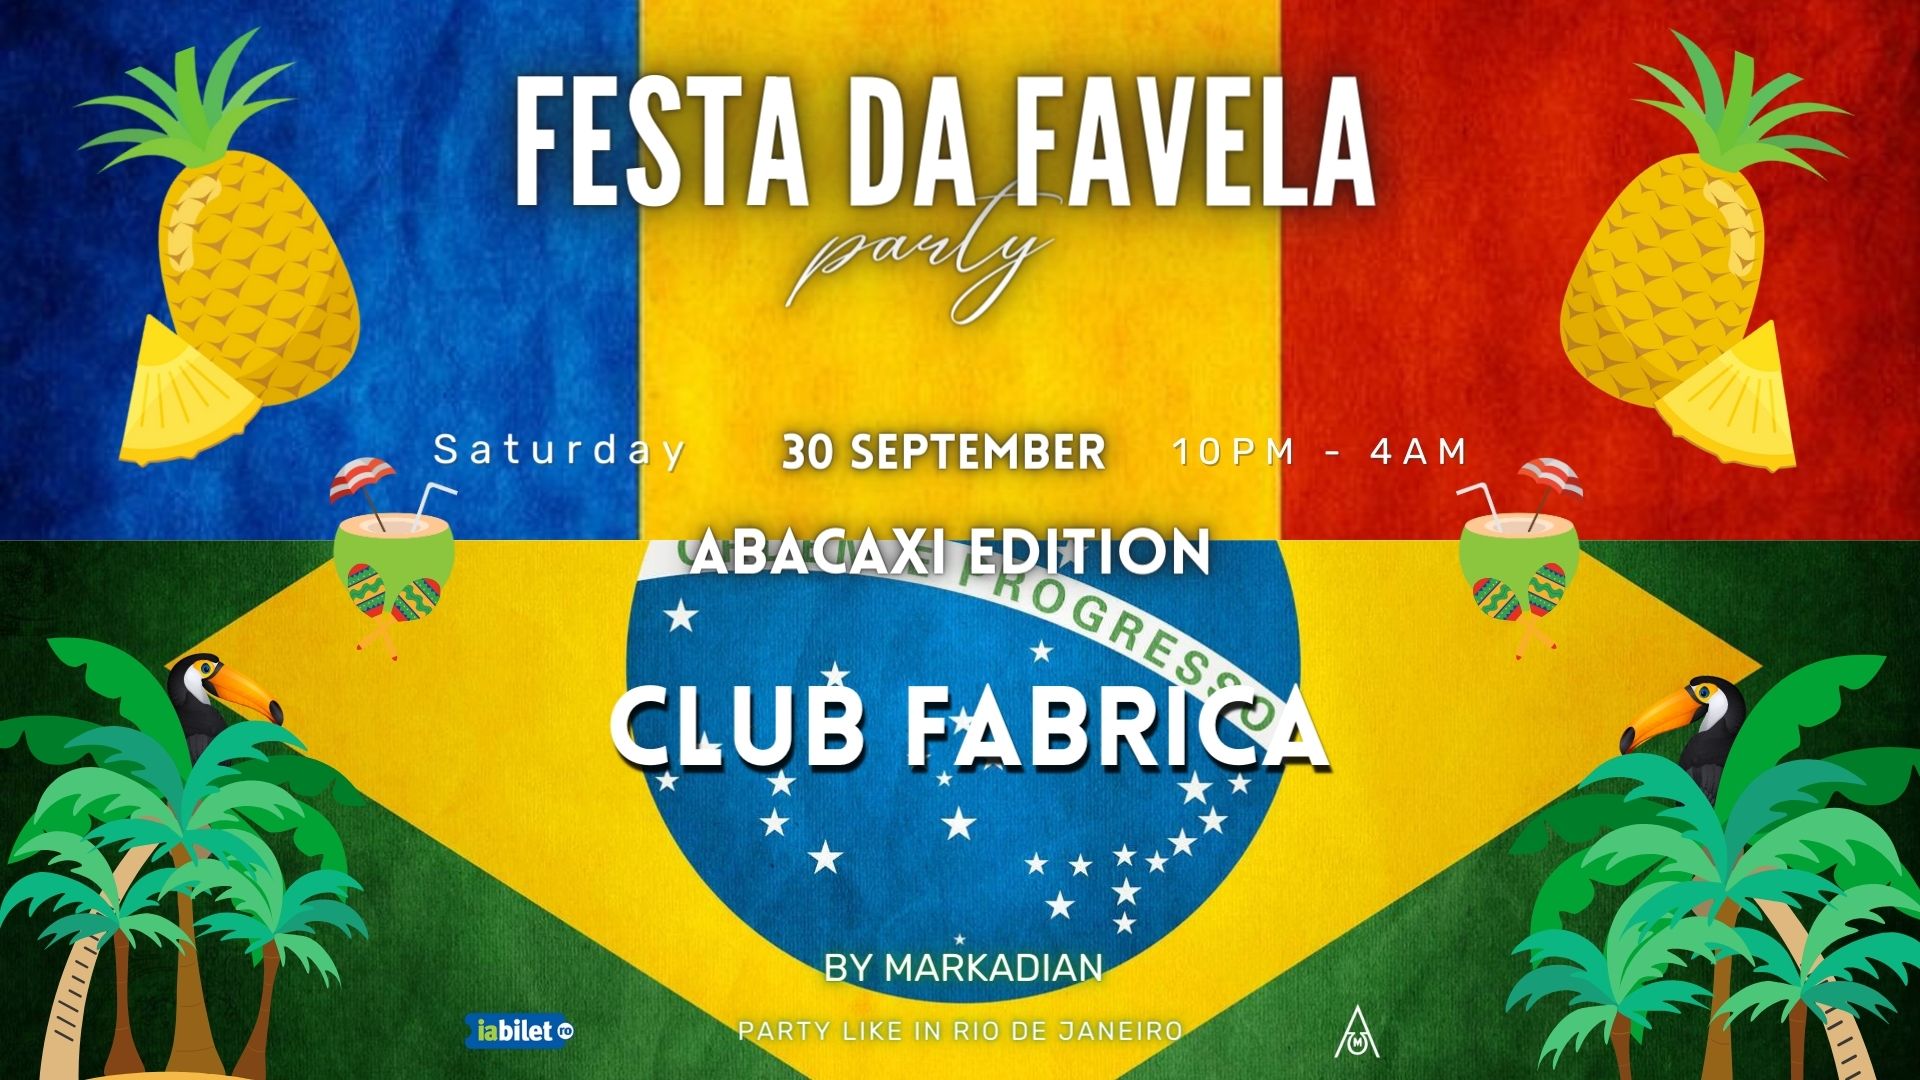 Festa da Favela - Abacaxi Edition